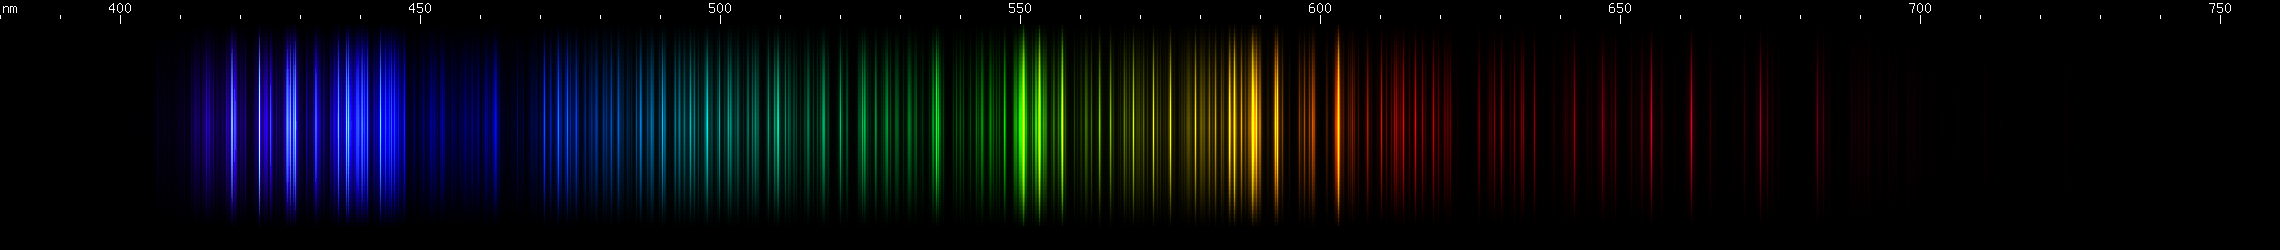 Spectral Lines of Molybdenum